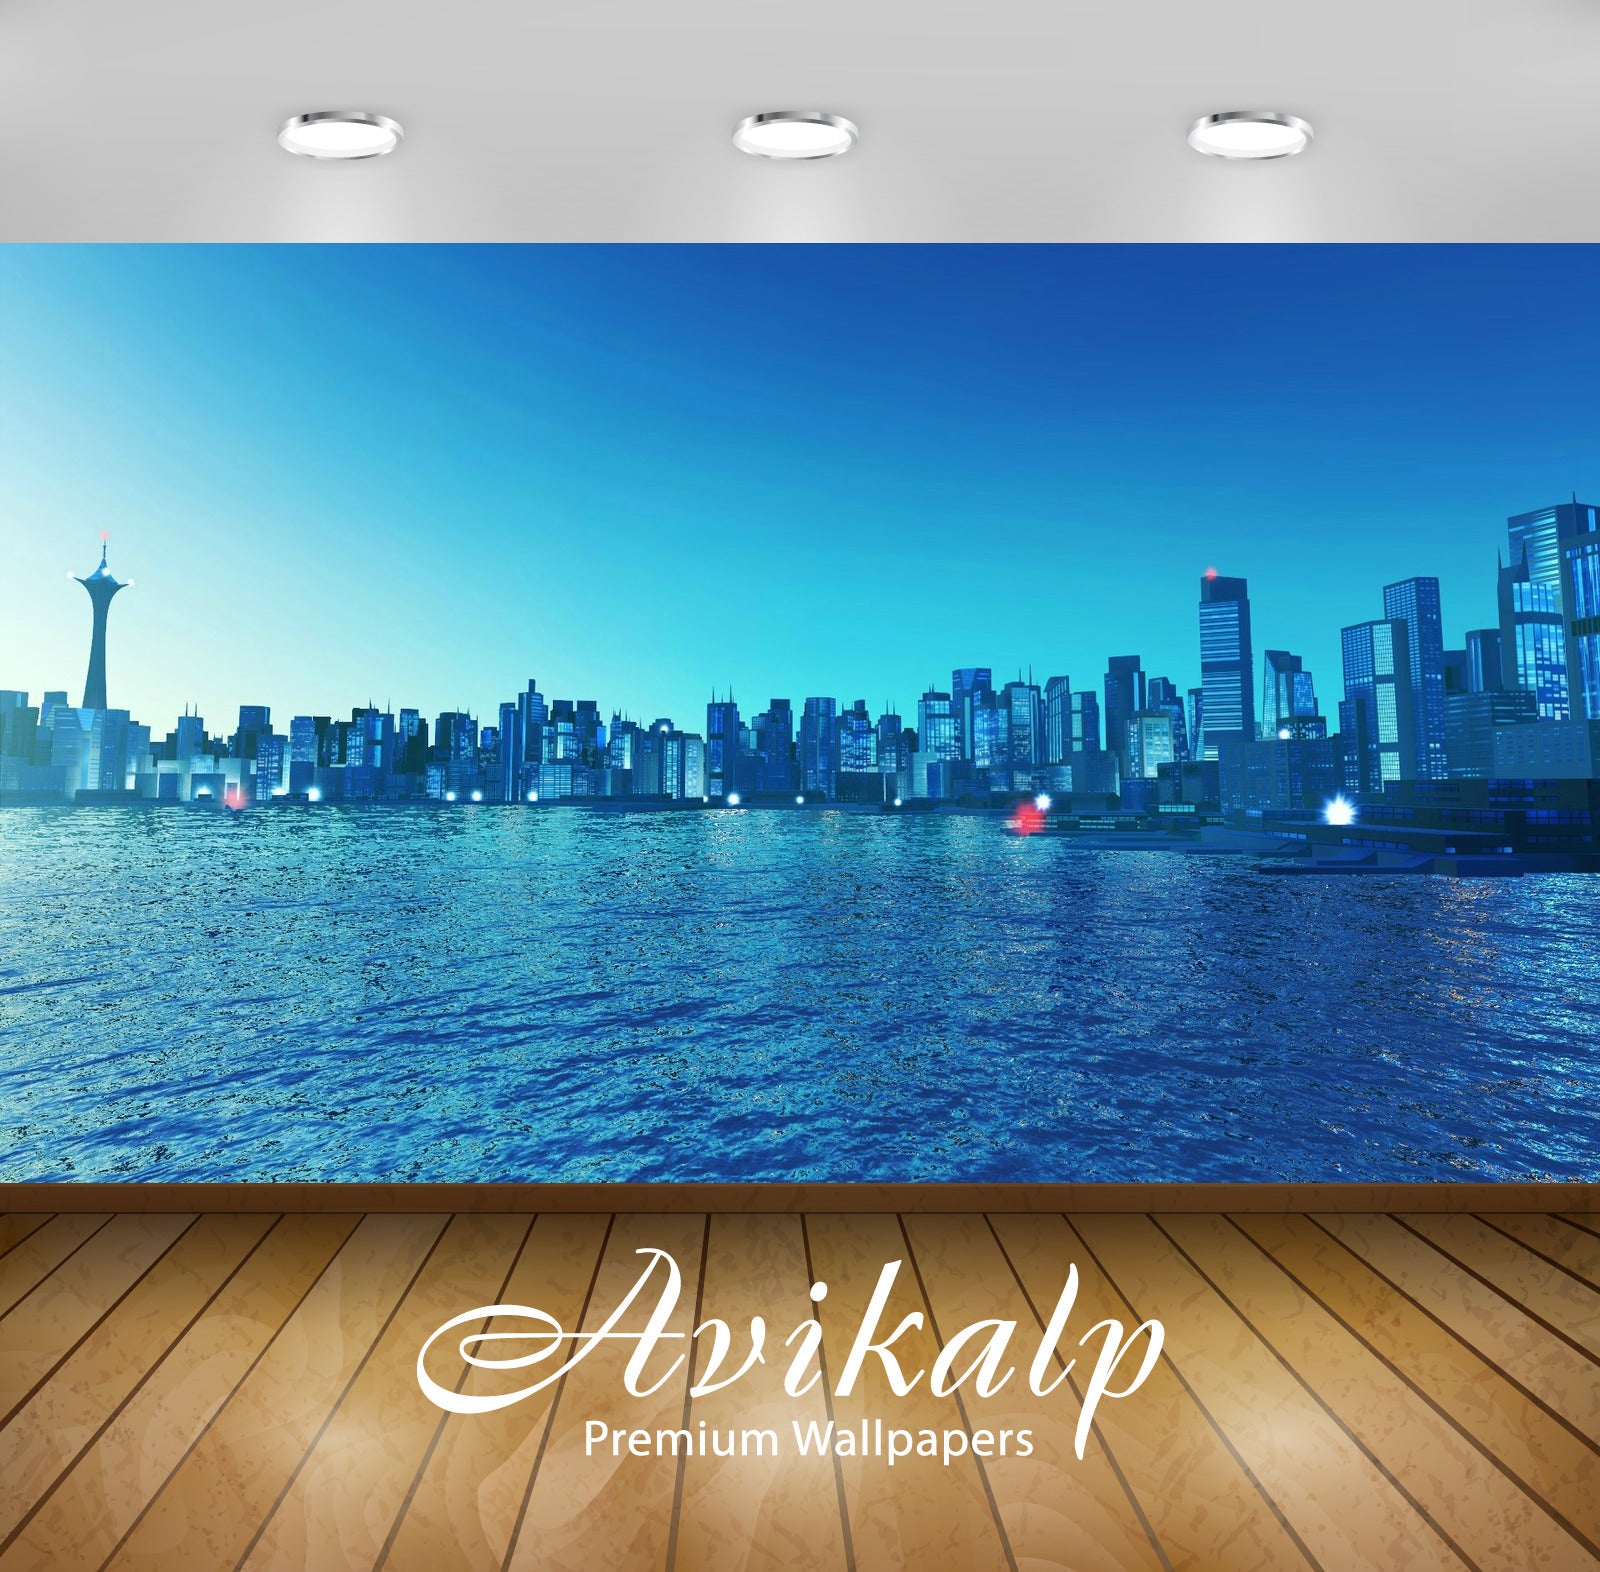 Avikalp Exclusive Skyline AWI1212 HD Wallpapers for Living room, Hall, Kids Room, Kitchen, TV Backgr